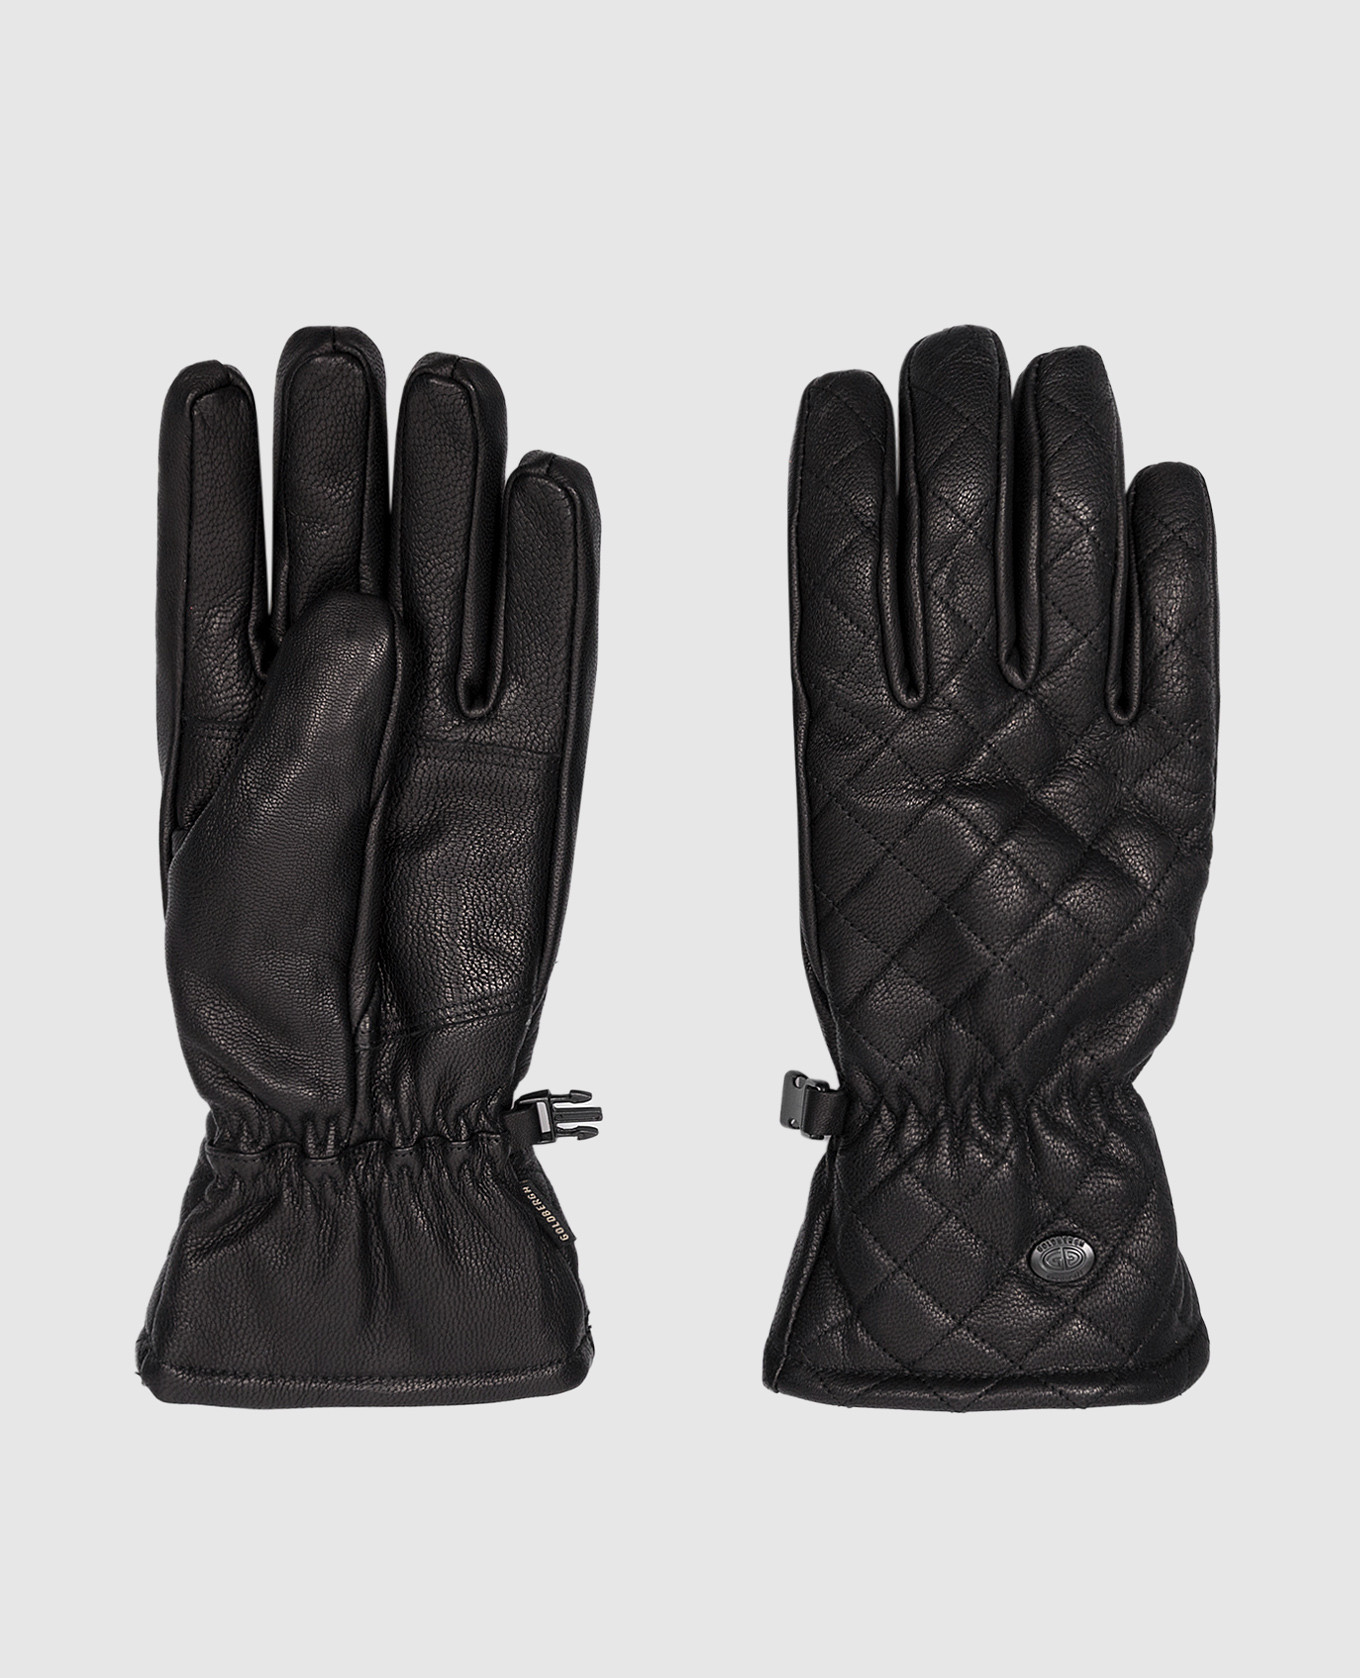 Nishi black leather gloves with metal logo